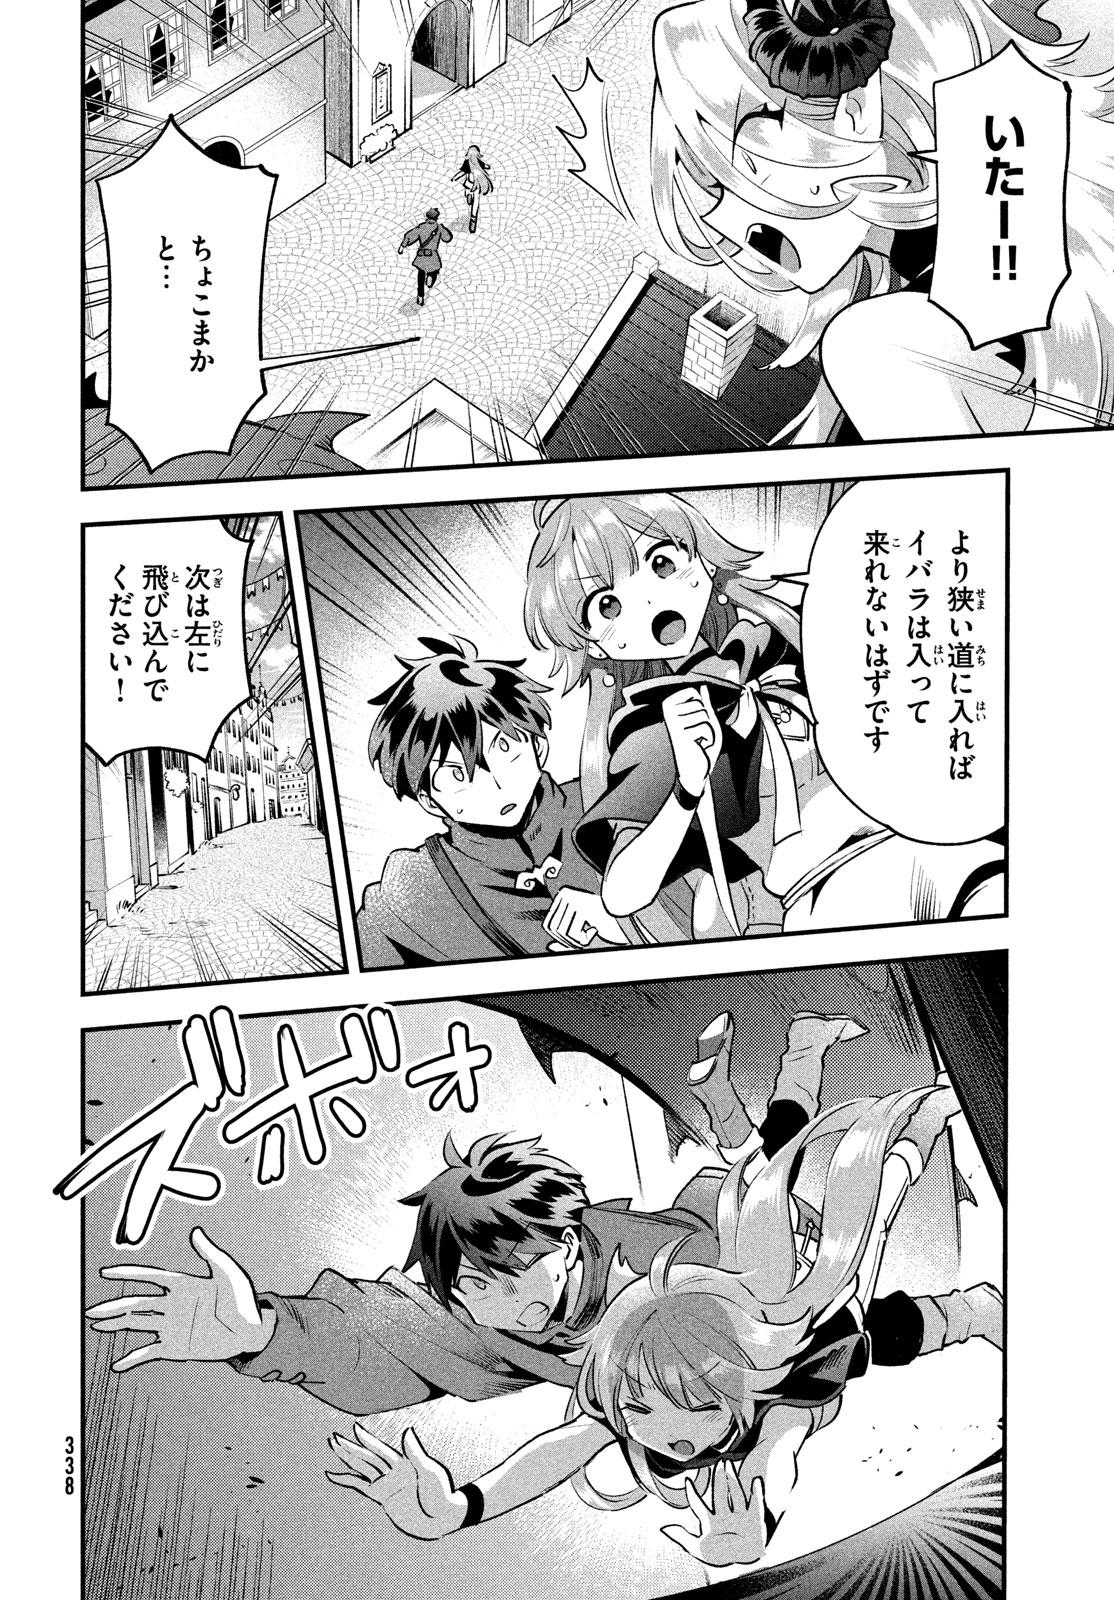 7-nin no Nemuri Hime - Chapter 43 - Page 12